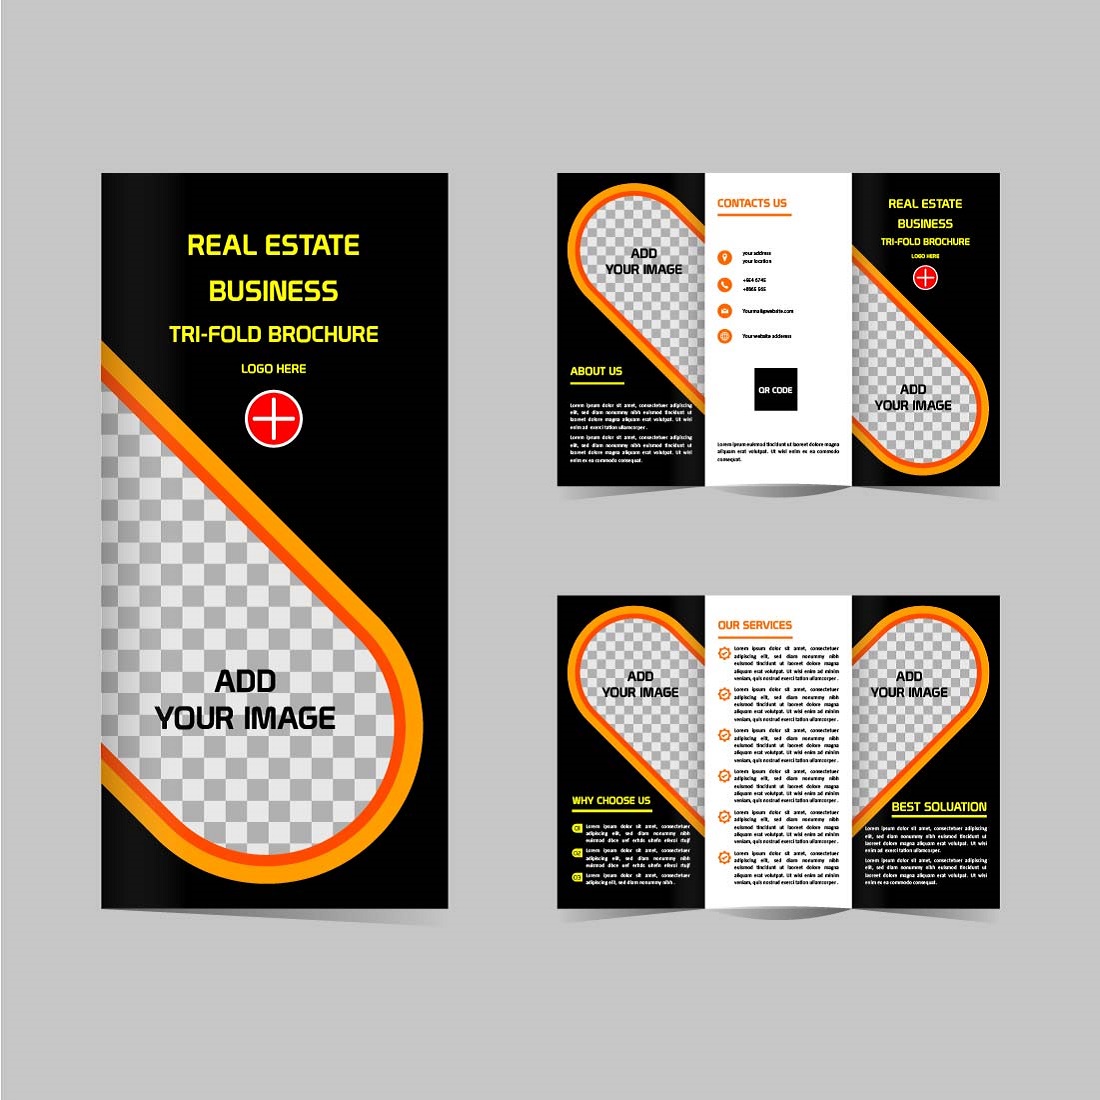 Vector real estate Tri fold brochure design template editable cover image.